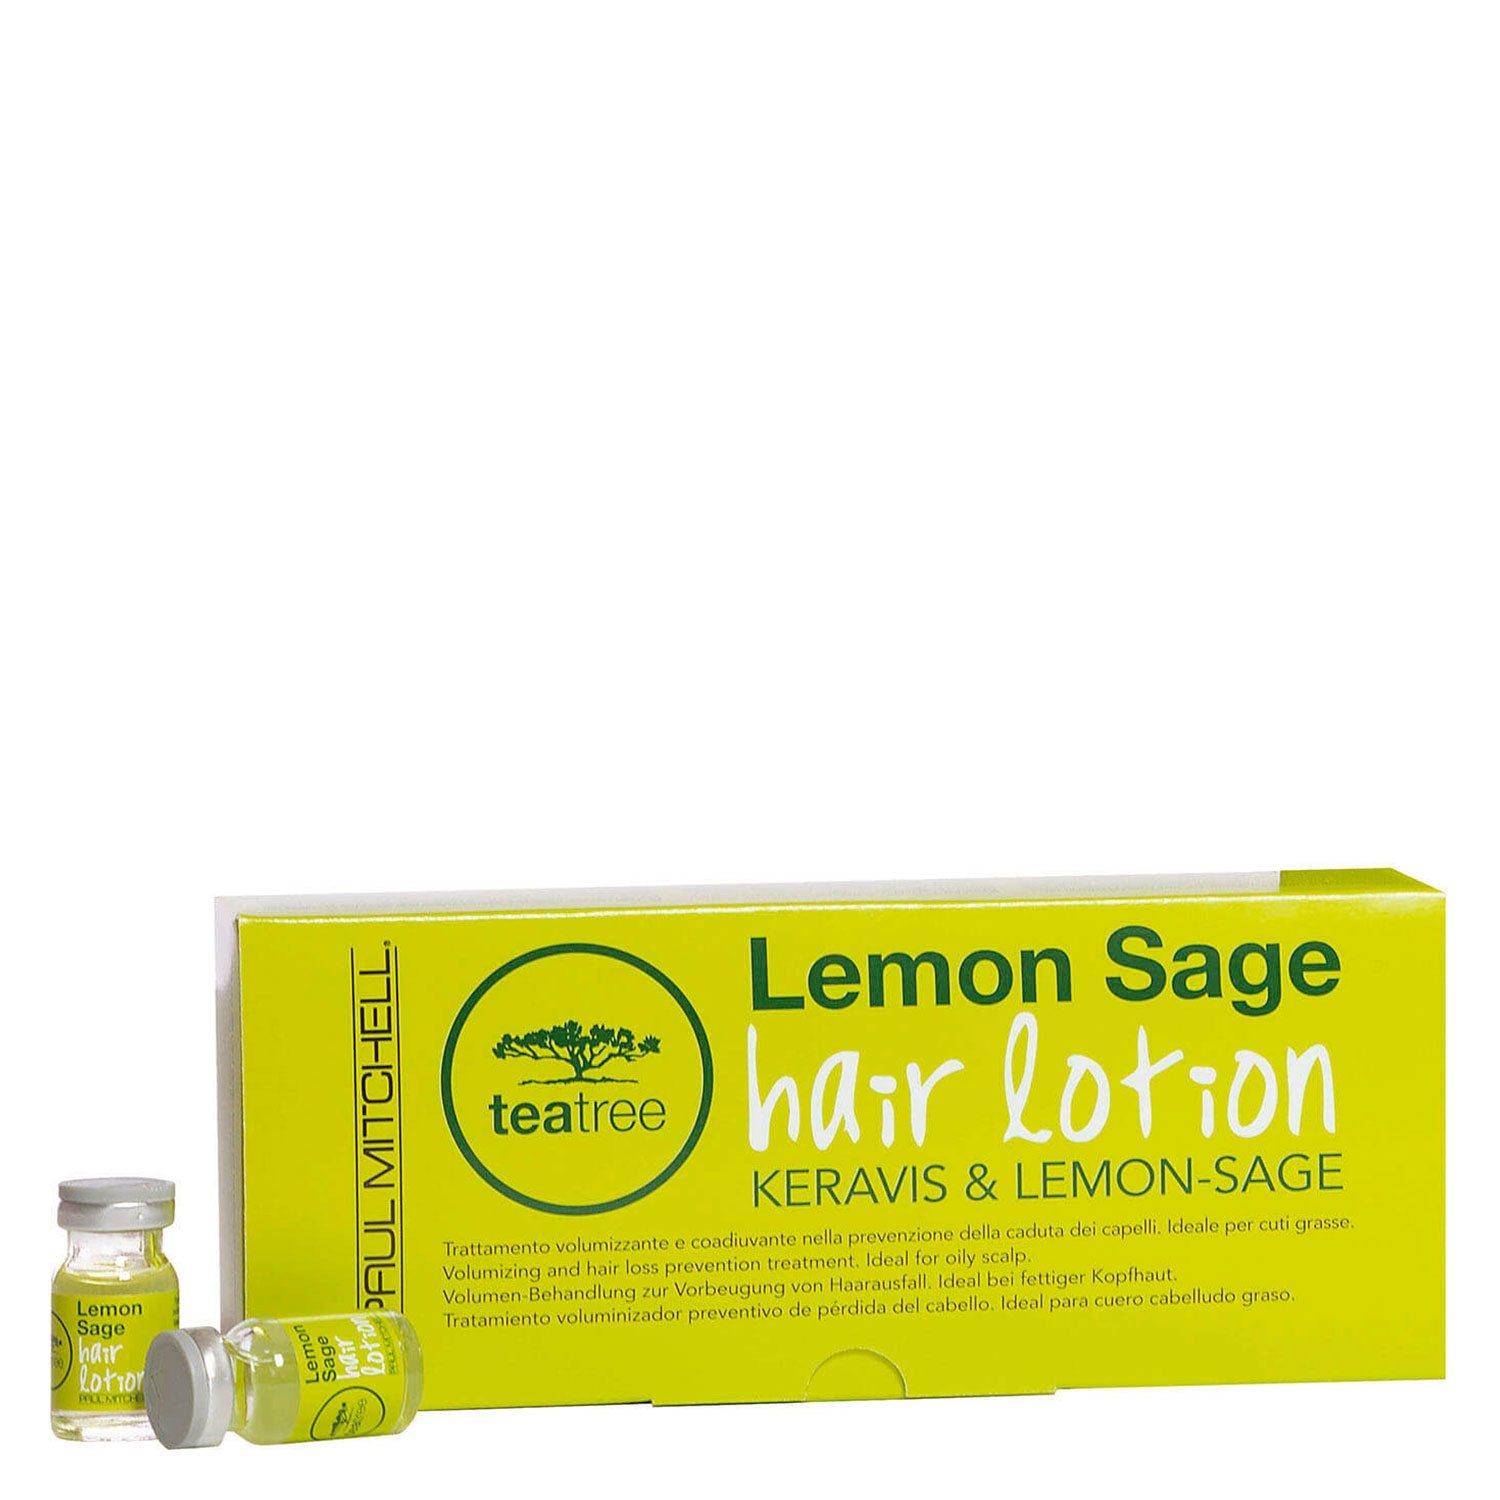 Product image from Tea Tree Lemon Sage - Hair Lotion